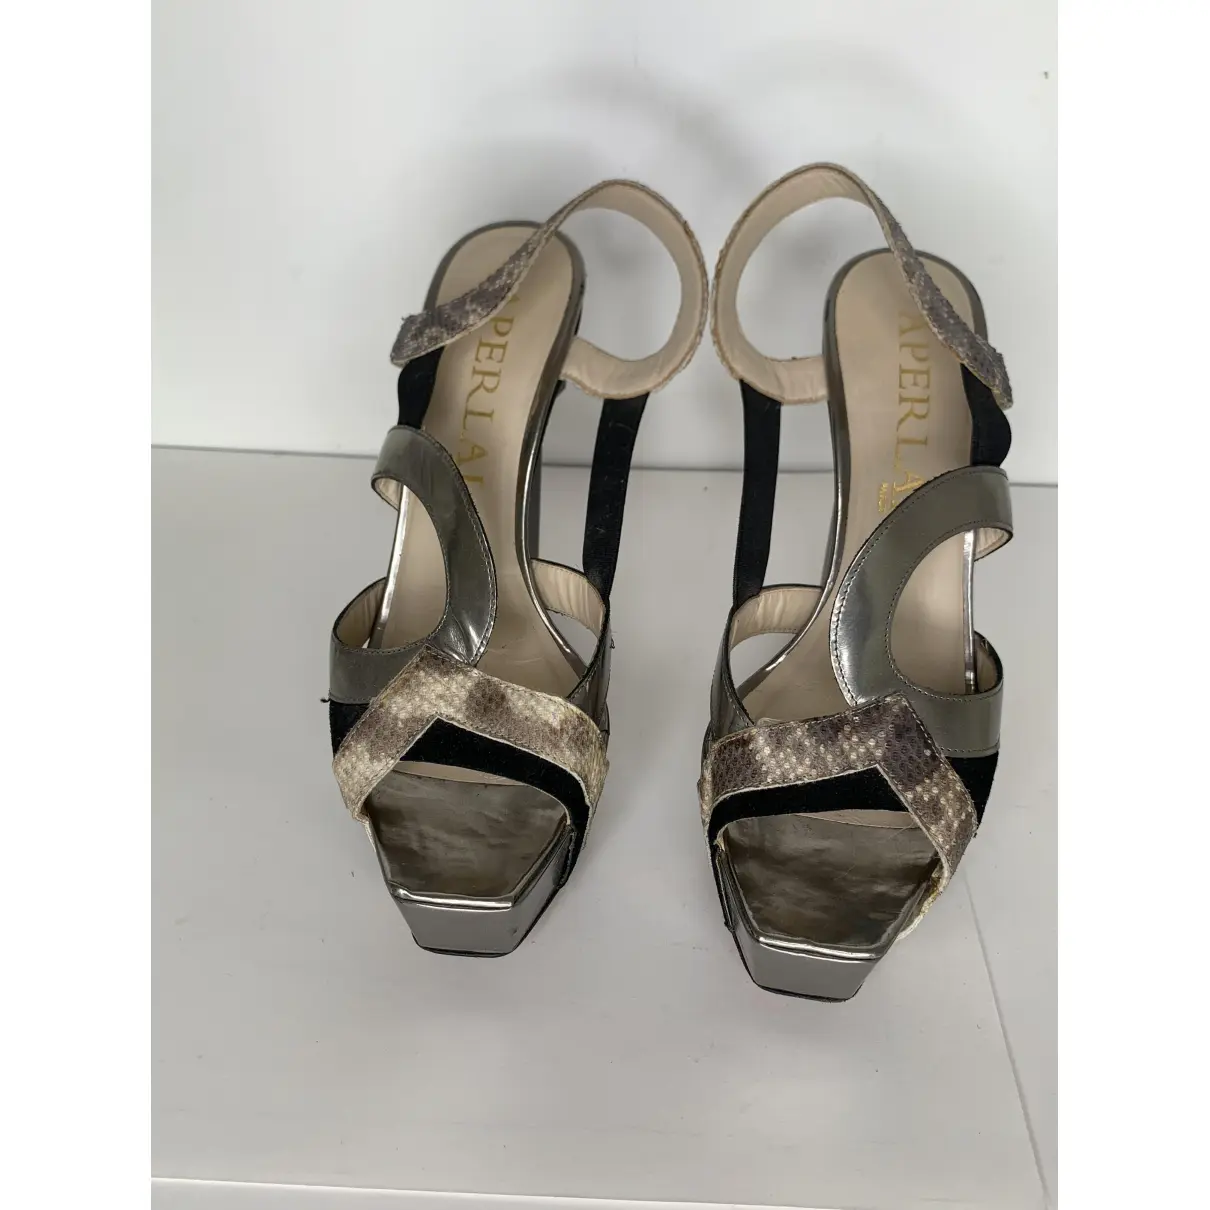 Buy Aperlai Leather sandals online